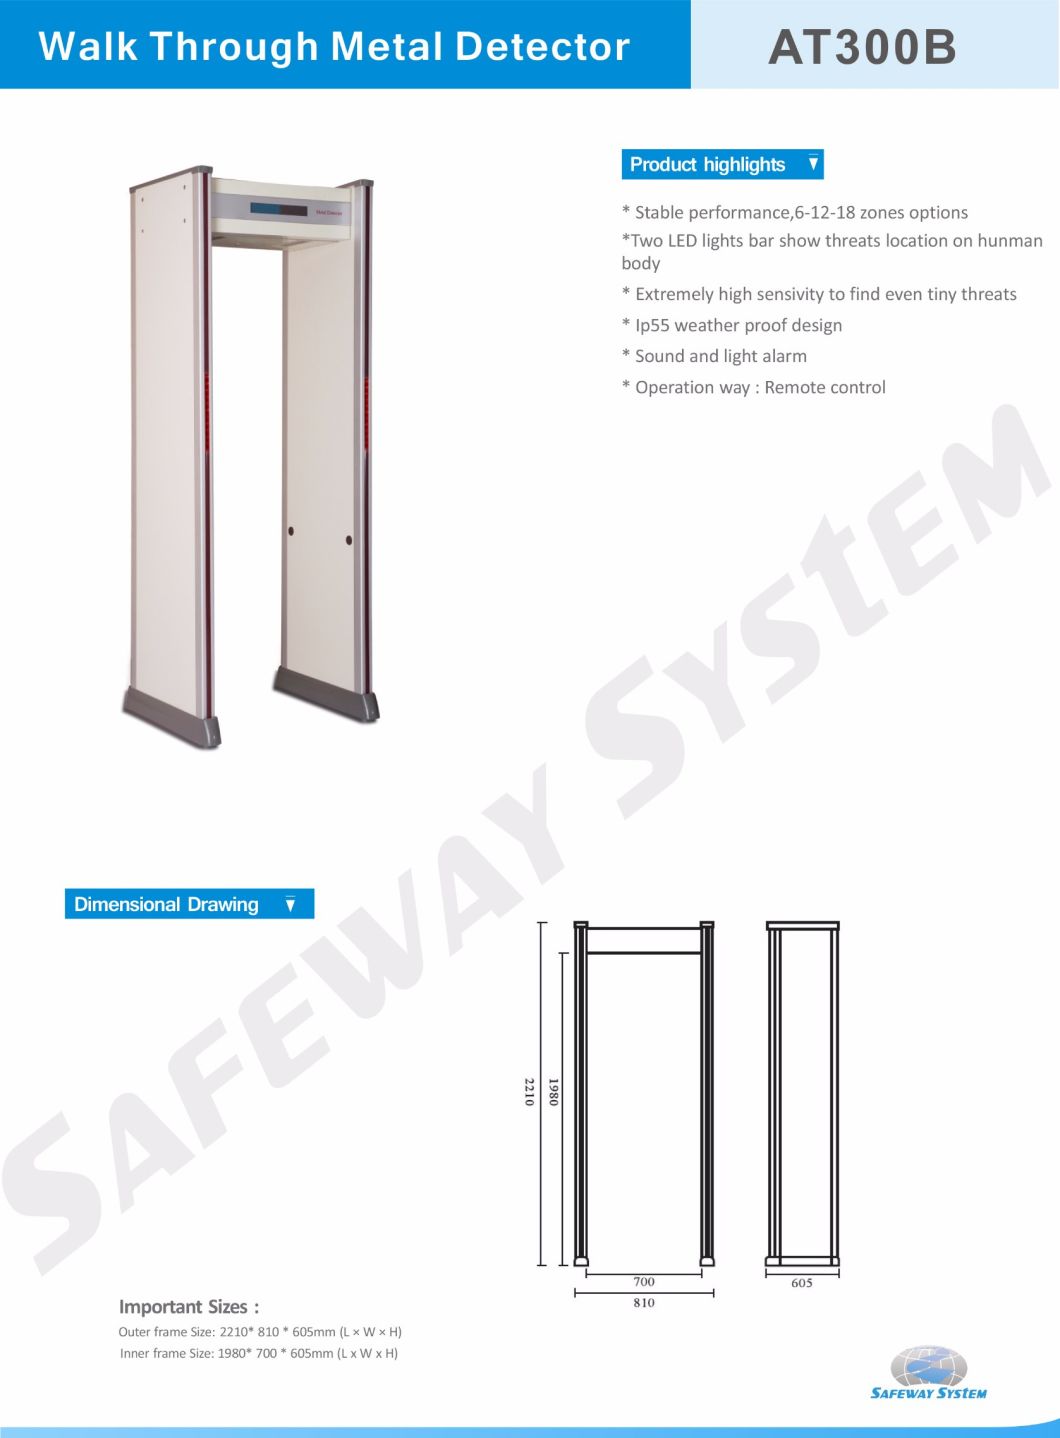 Pass-Through Metal Detection Body Safety Door (walk through metal detector)